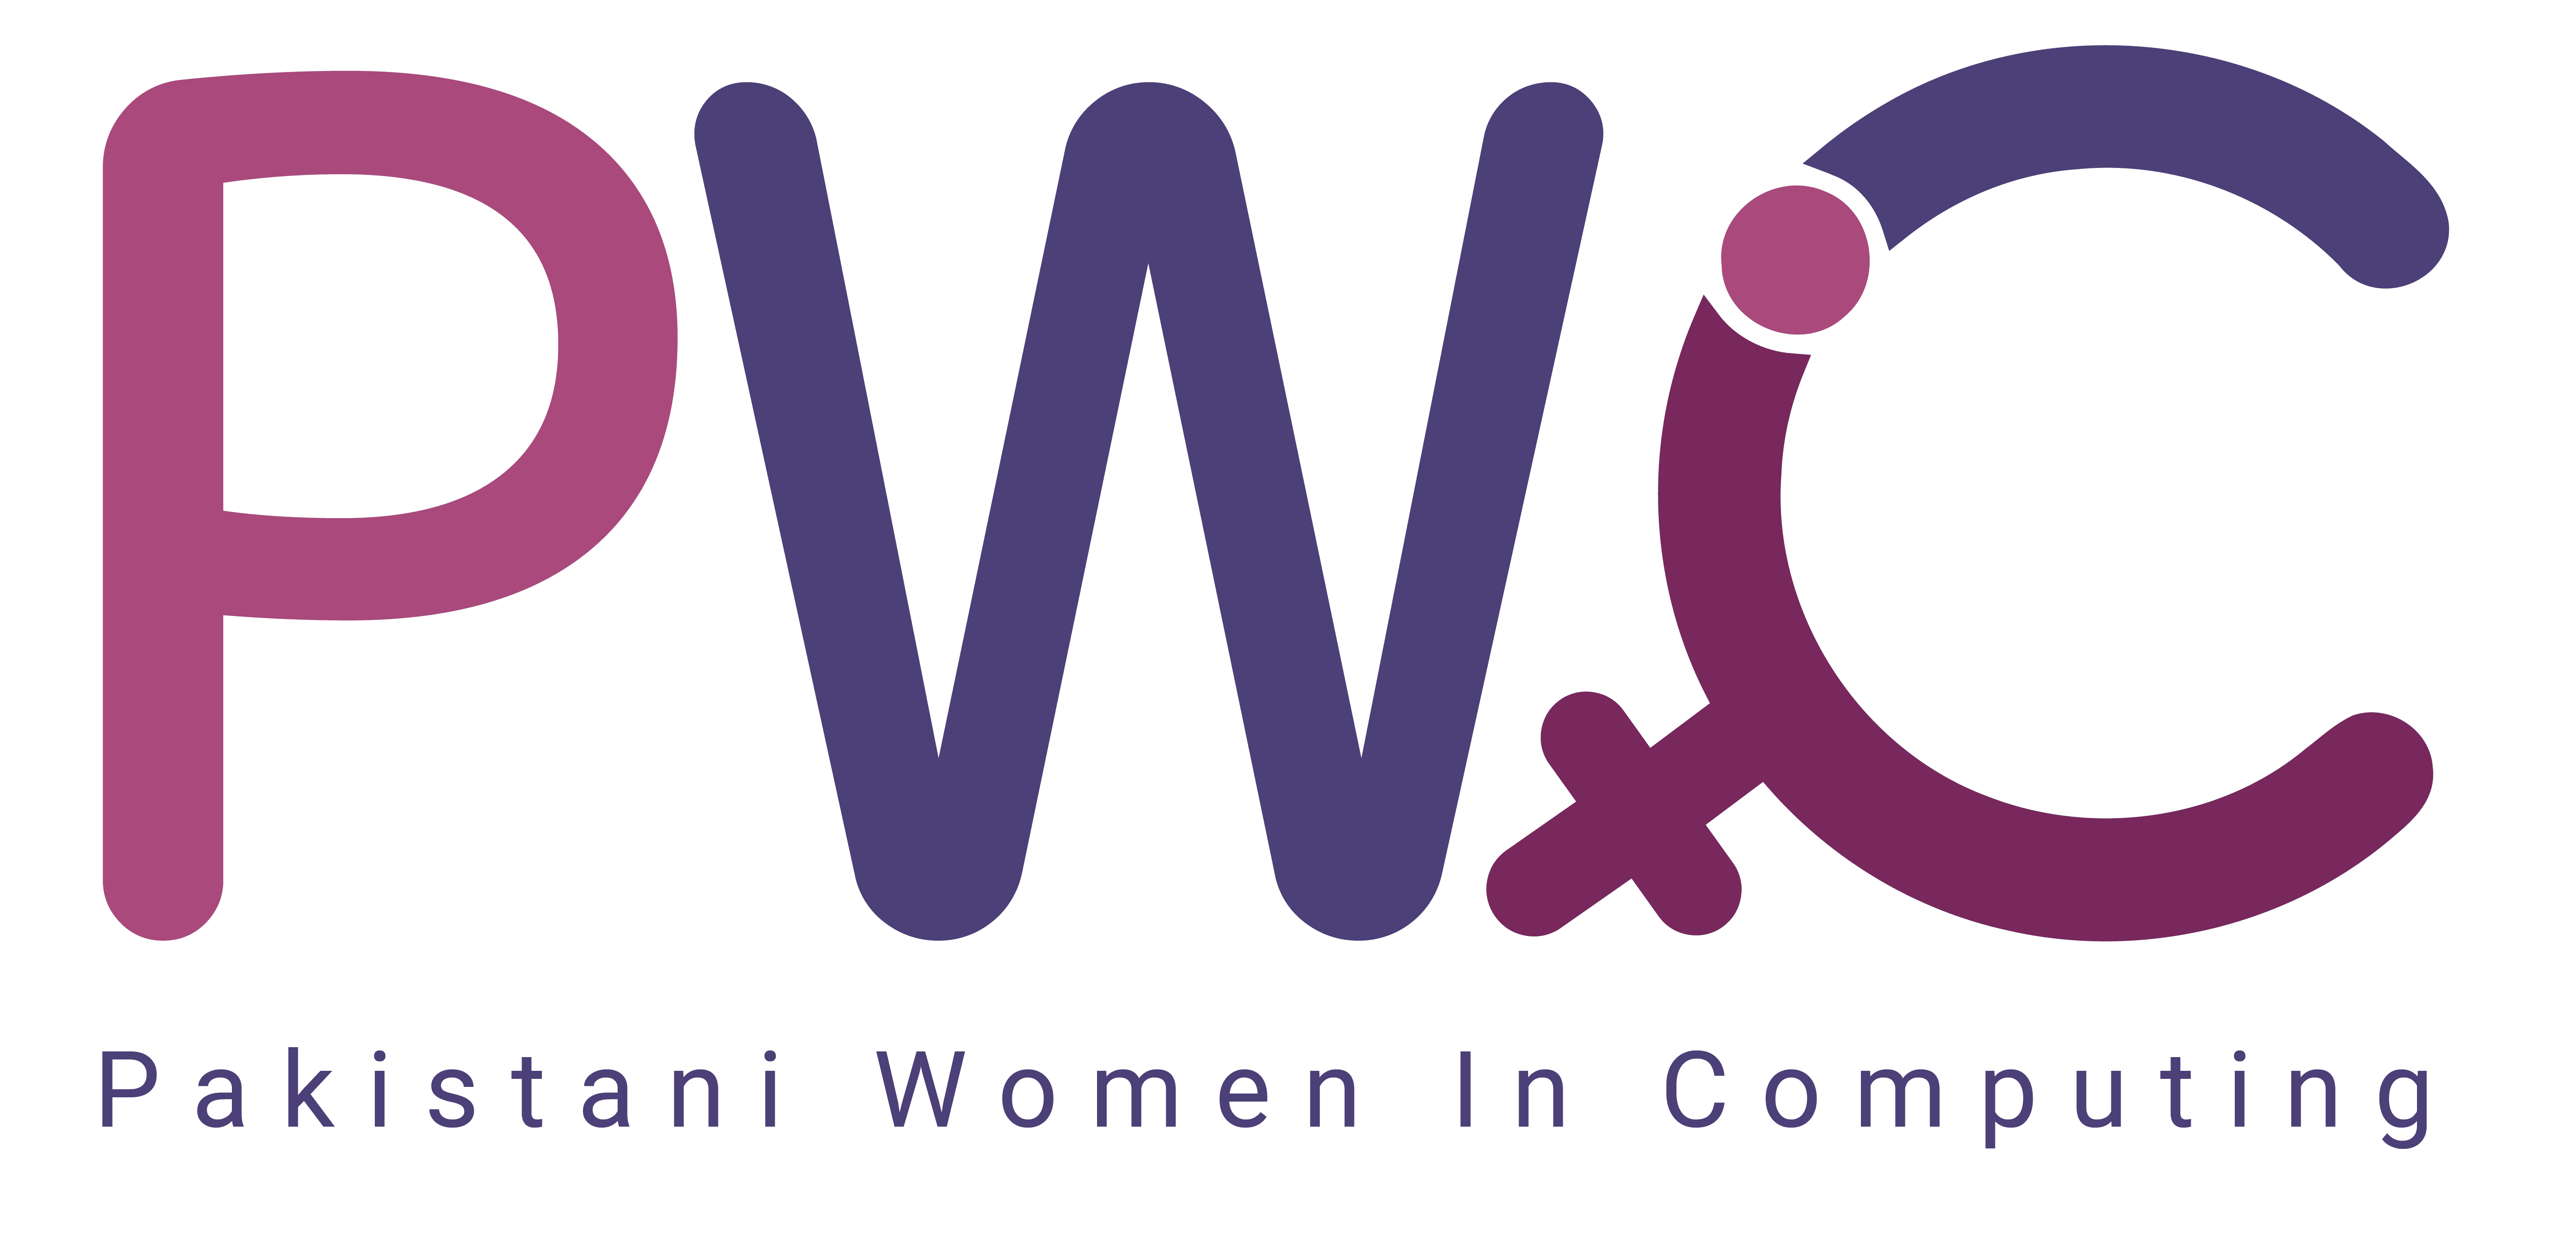 Pakistani Women in Computing (PWIC) logo